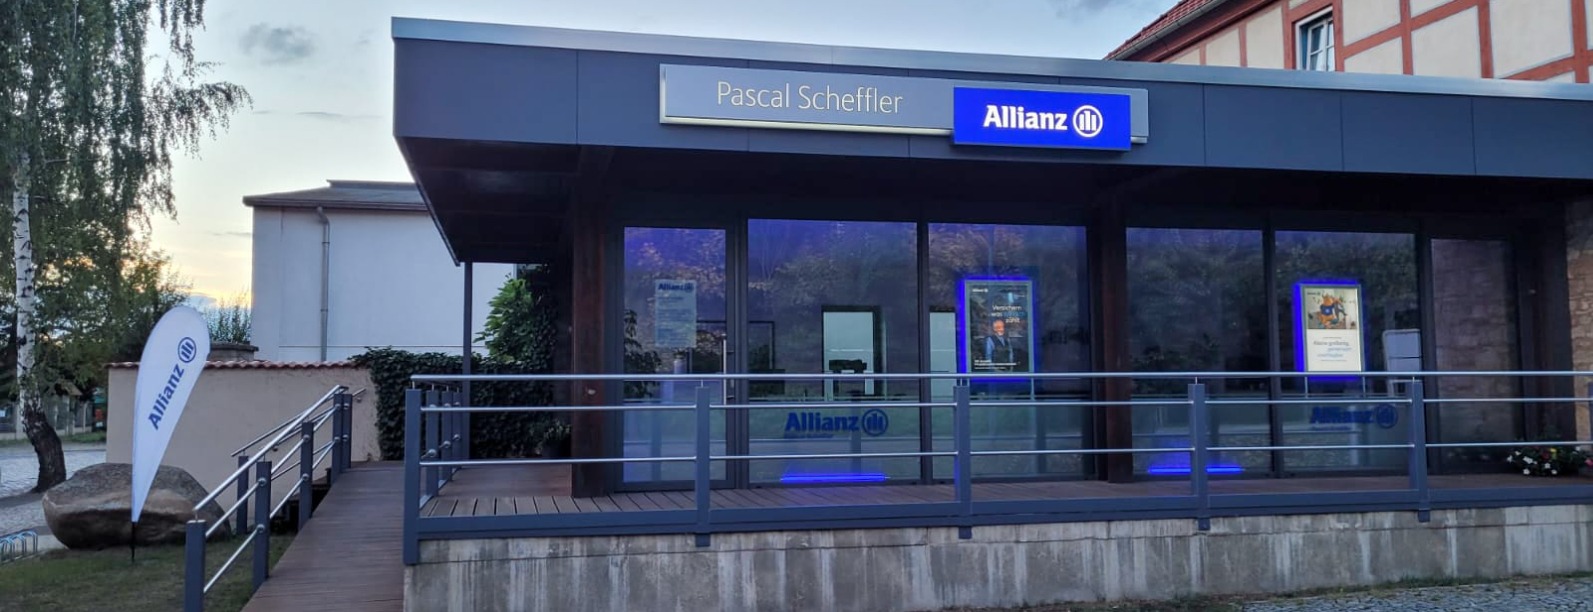 Allianz Versicherung Pascal Scheffler Hoym - Titelbild